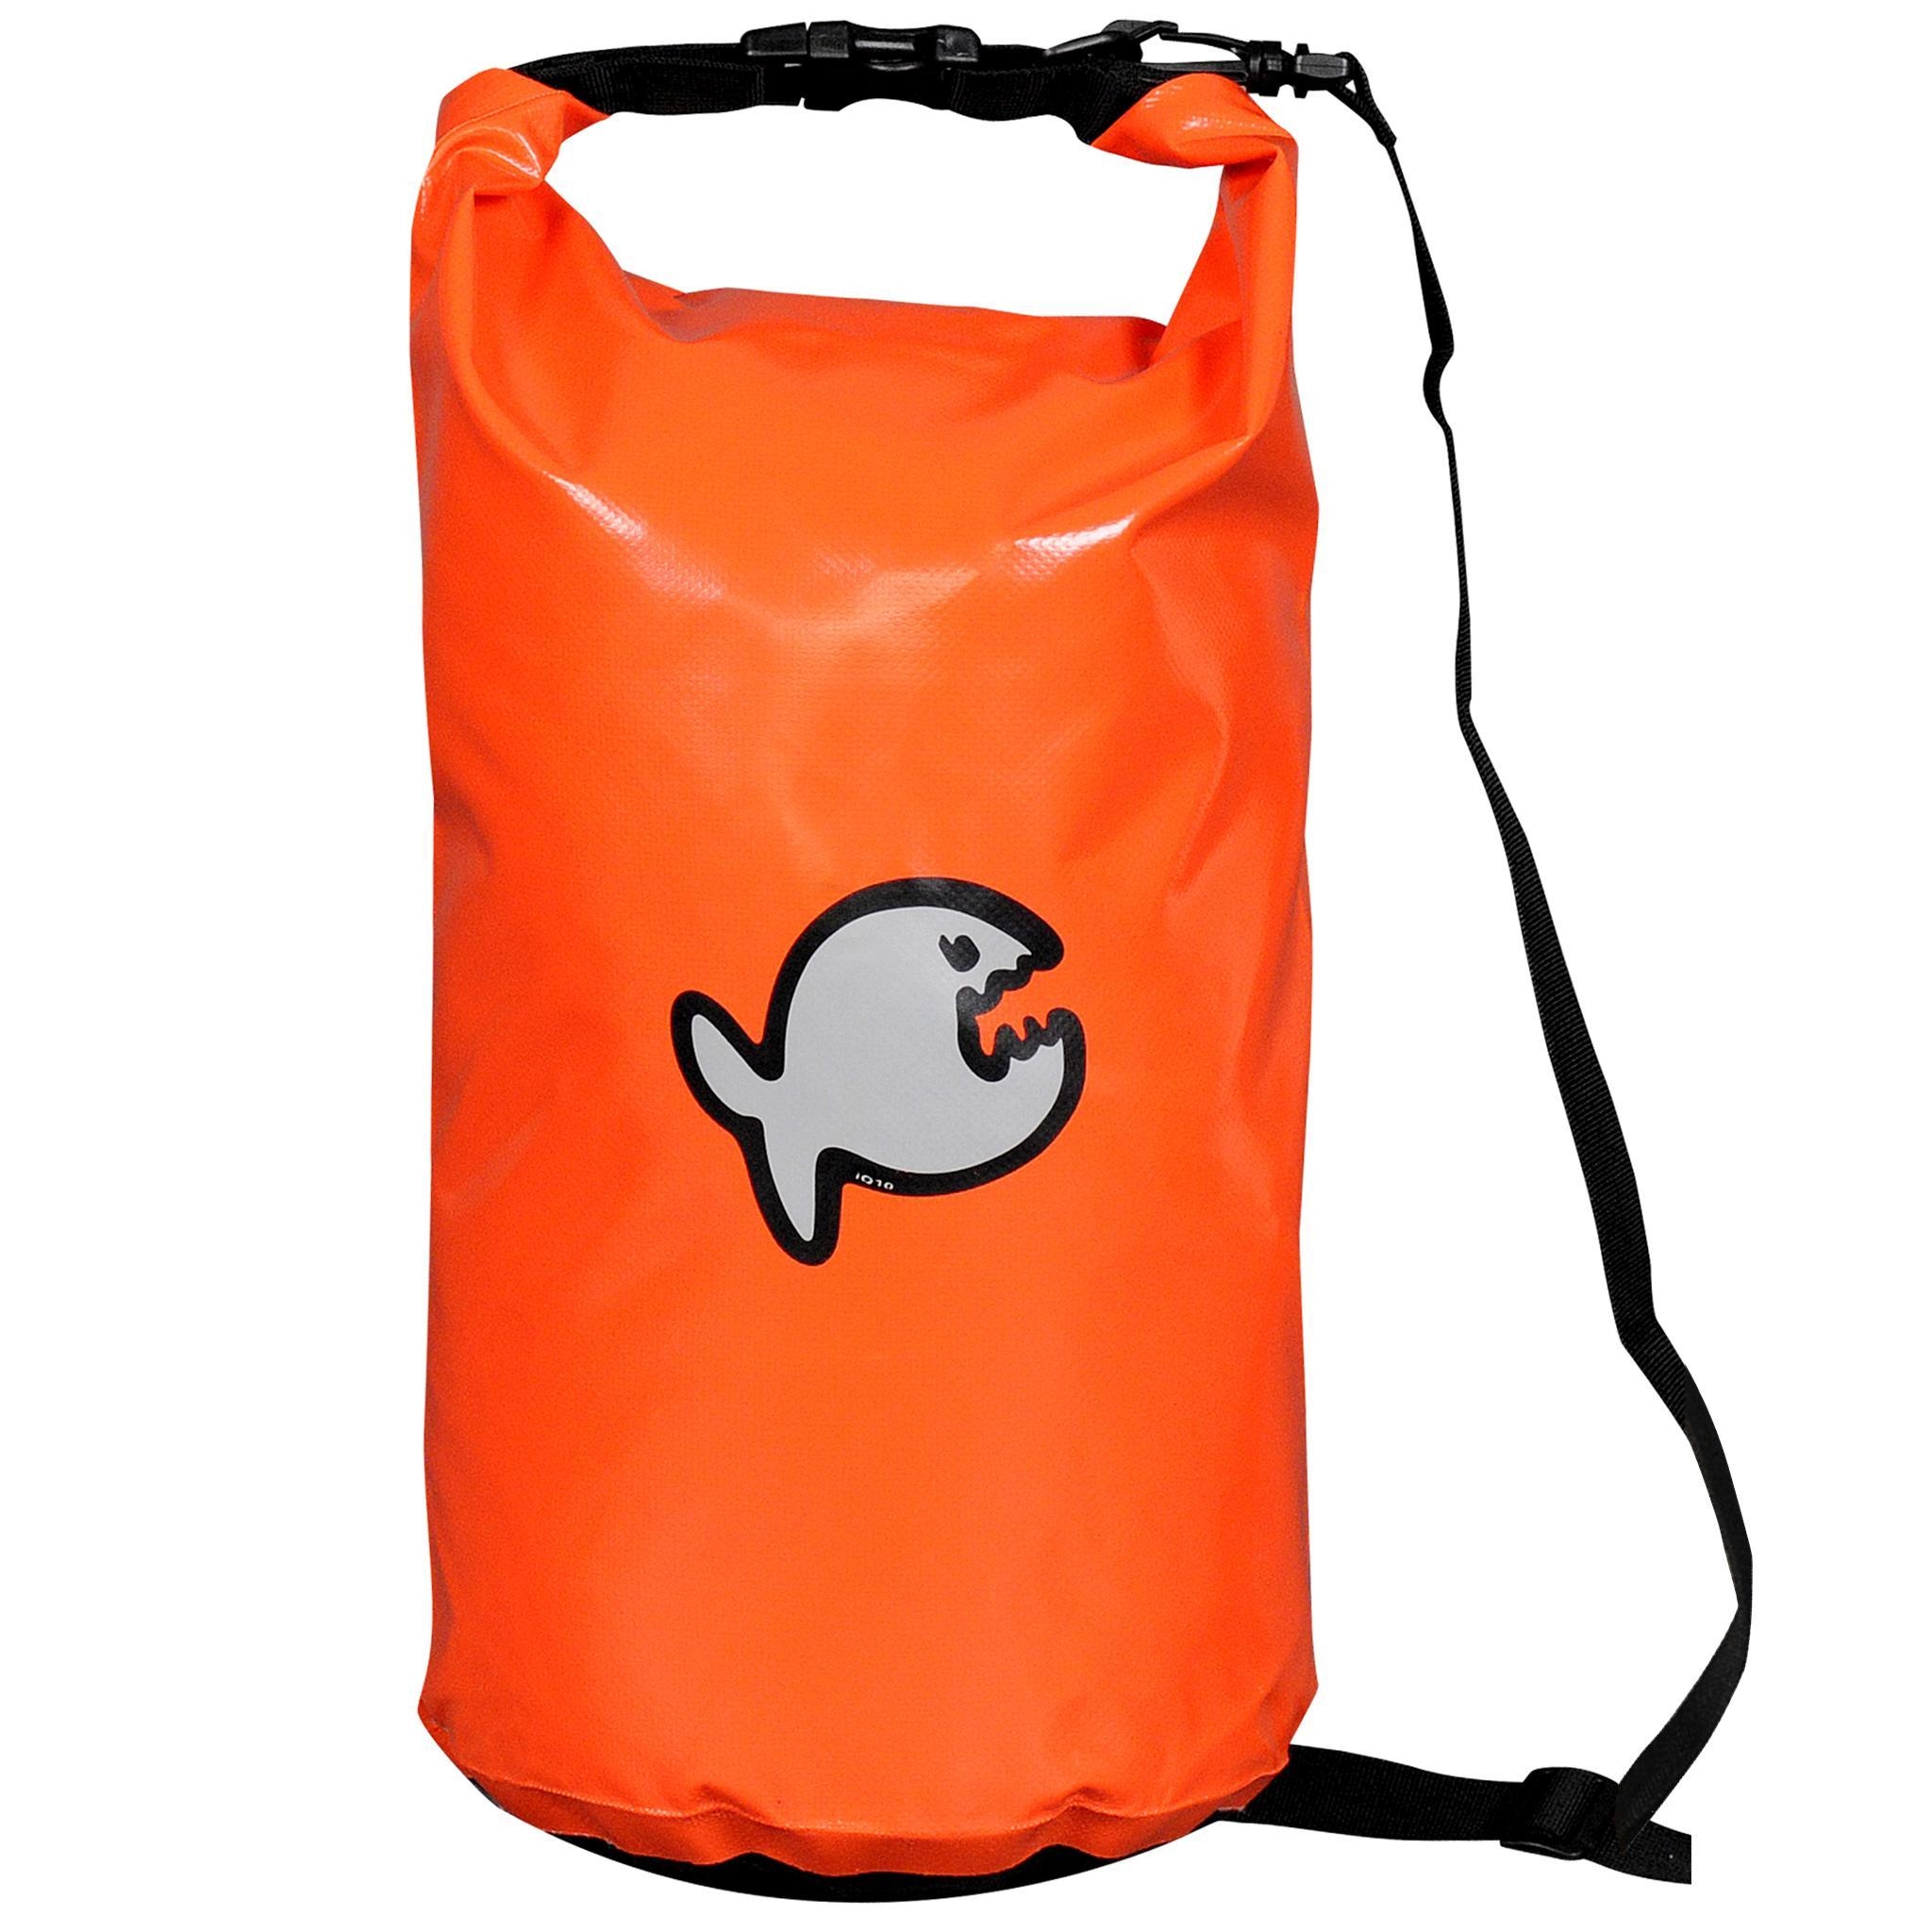 iQ 20L Dry Duffel Bags in Orange